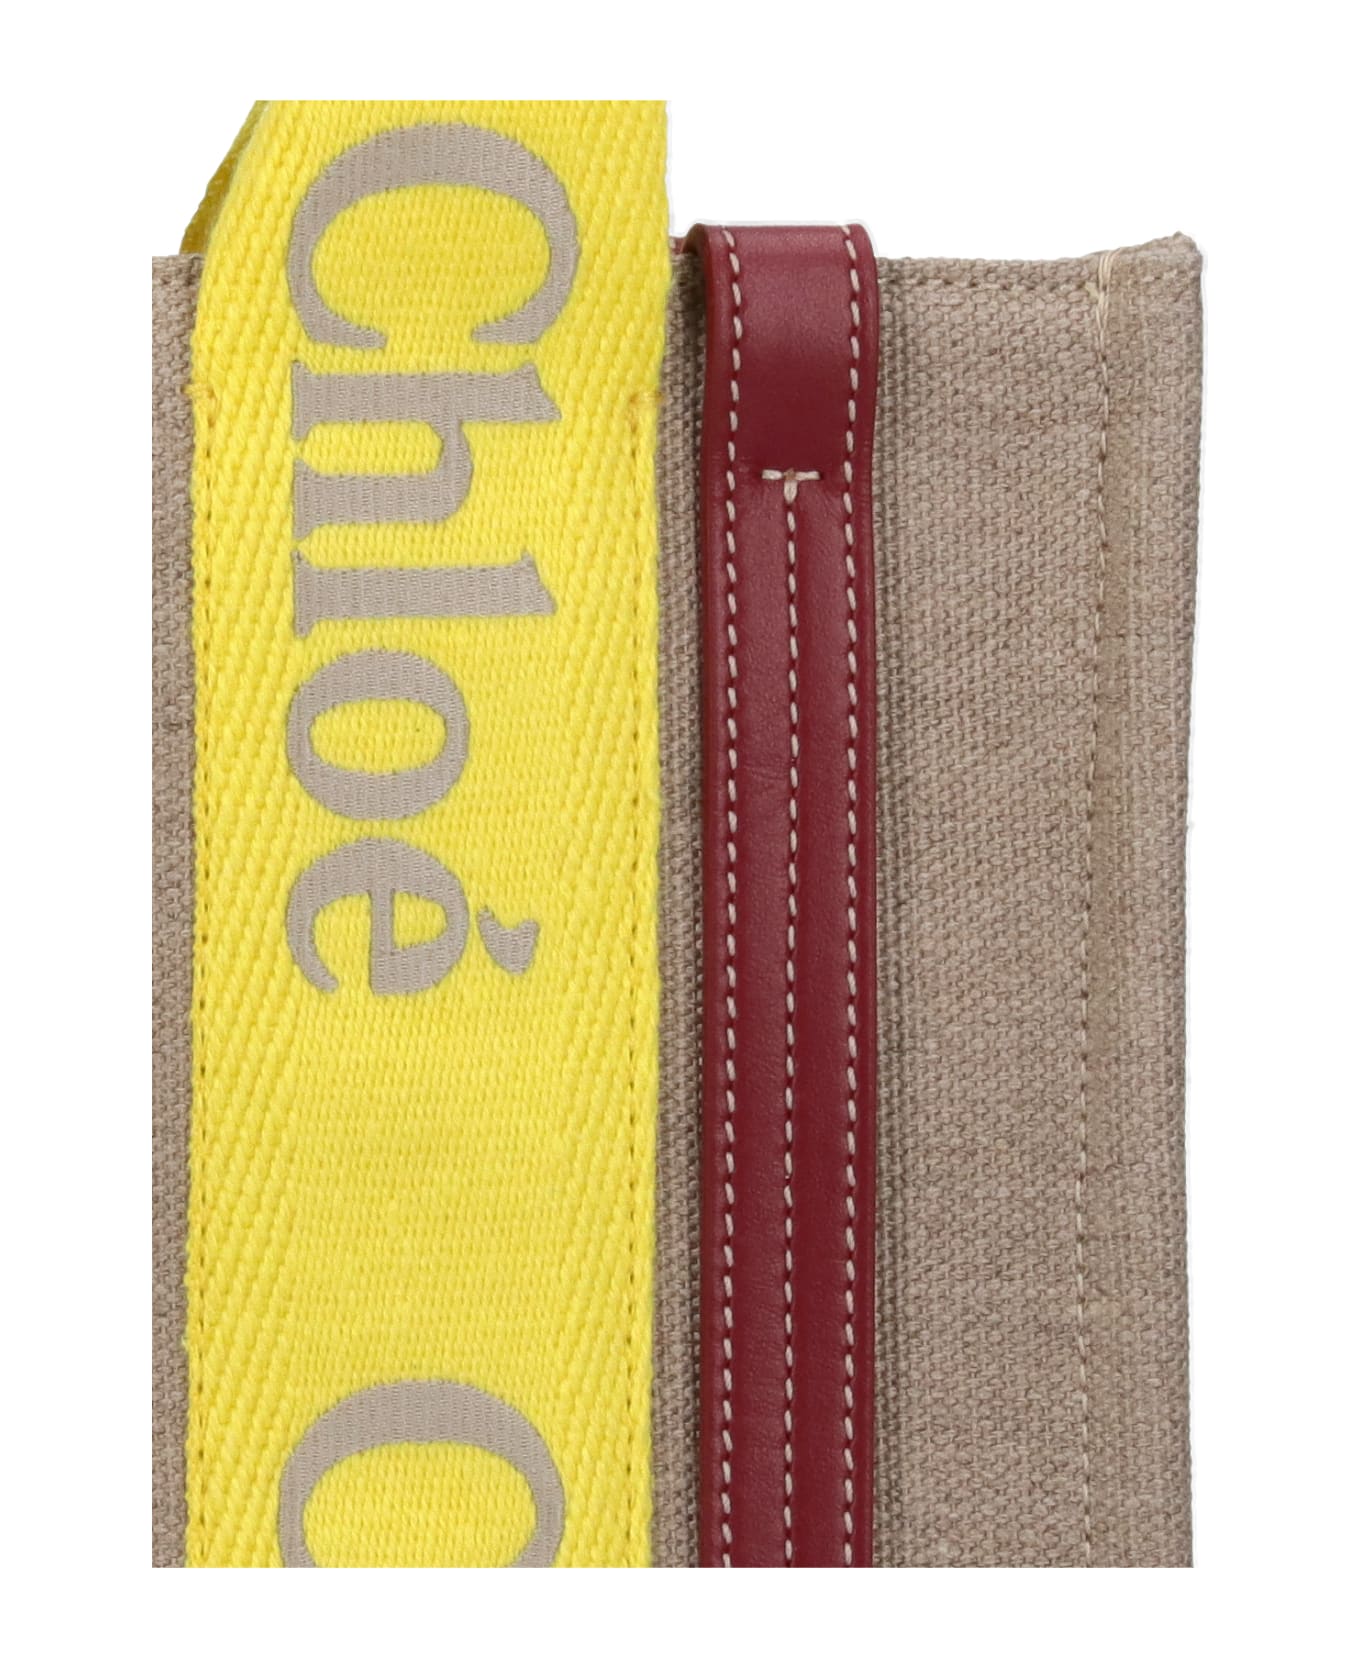 Chloé Tote Bag - Yellow